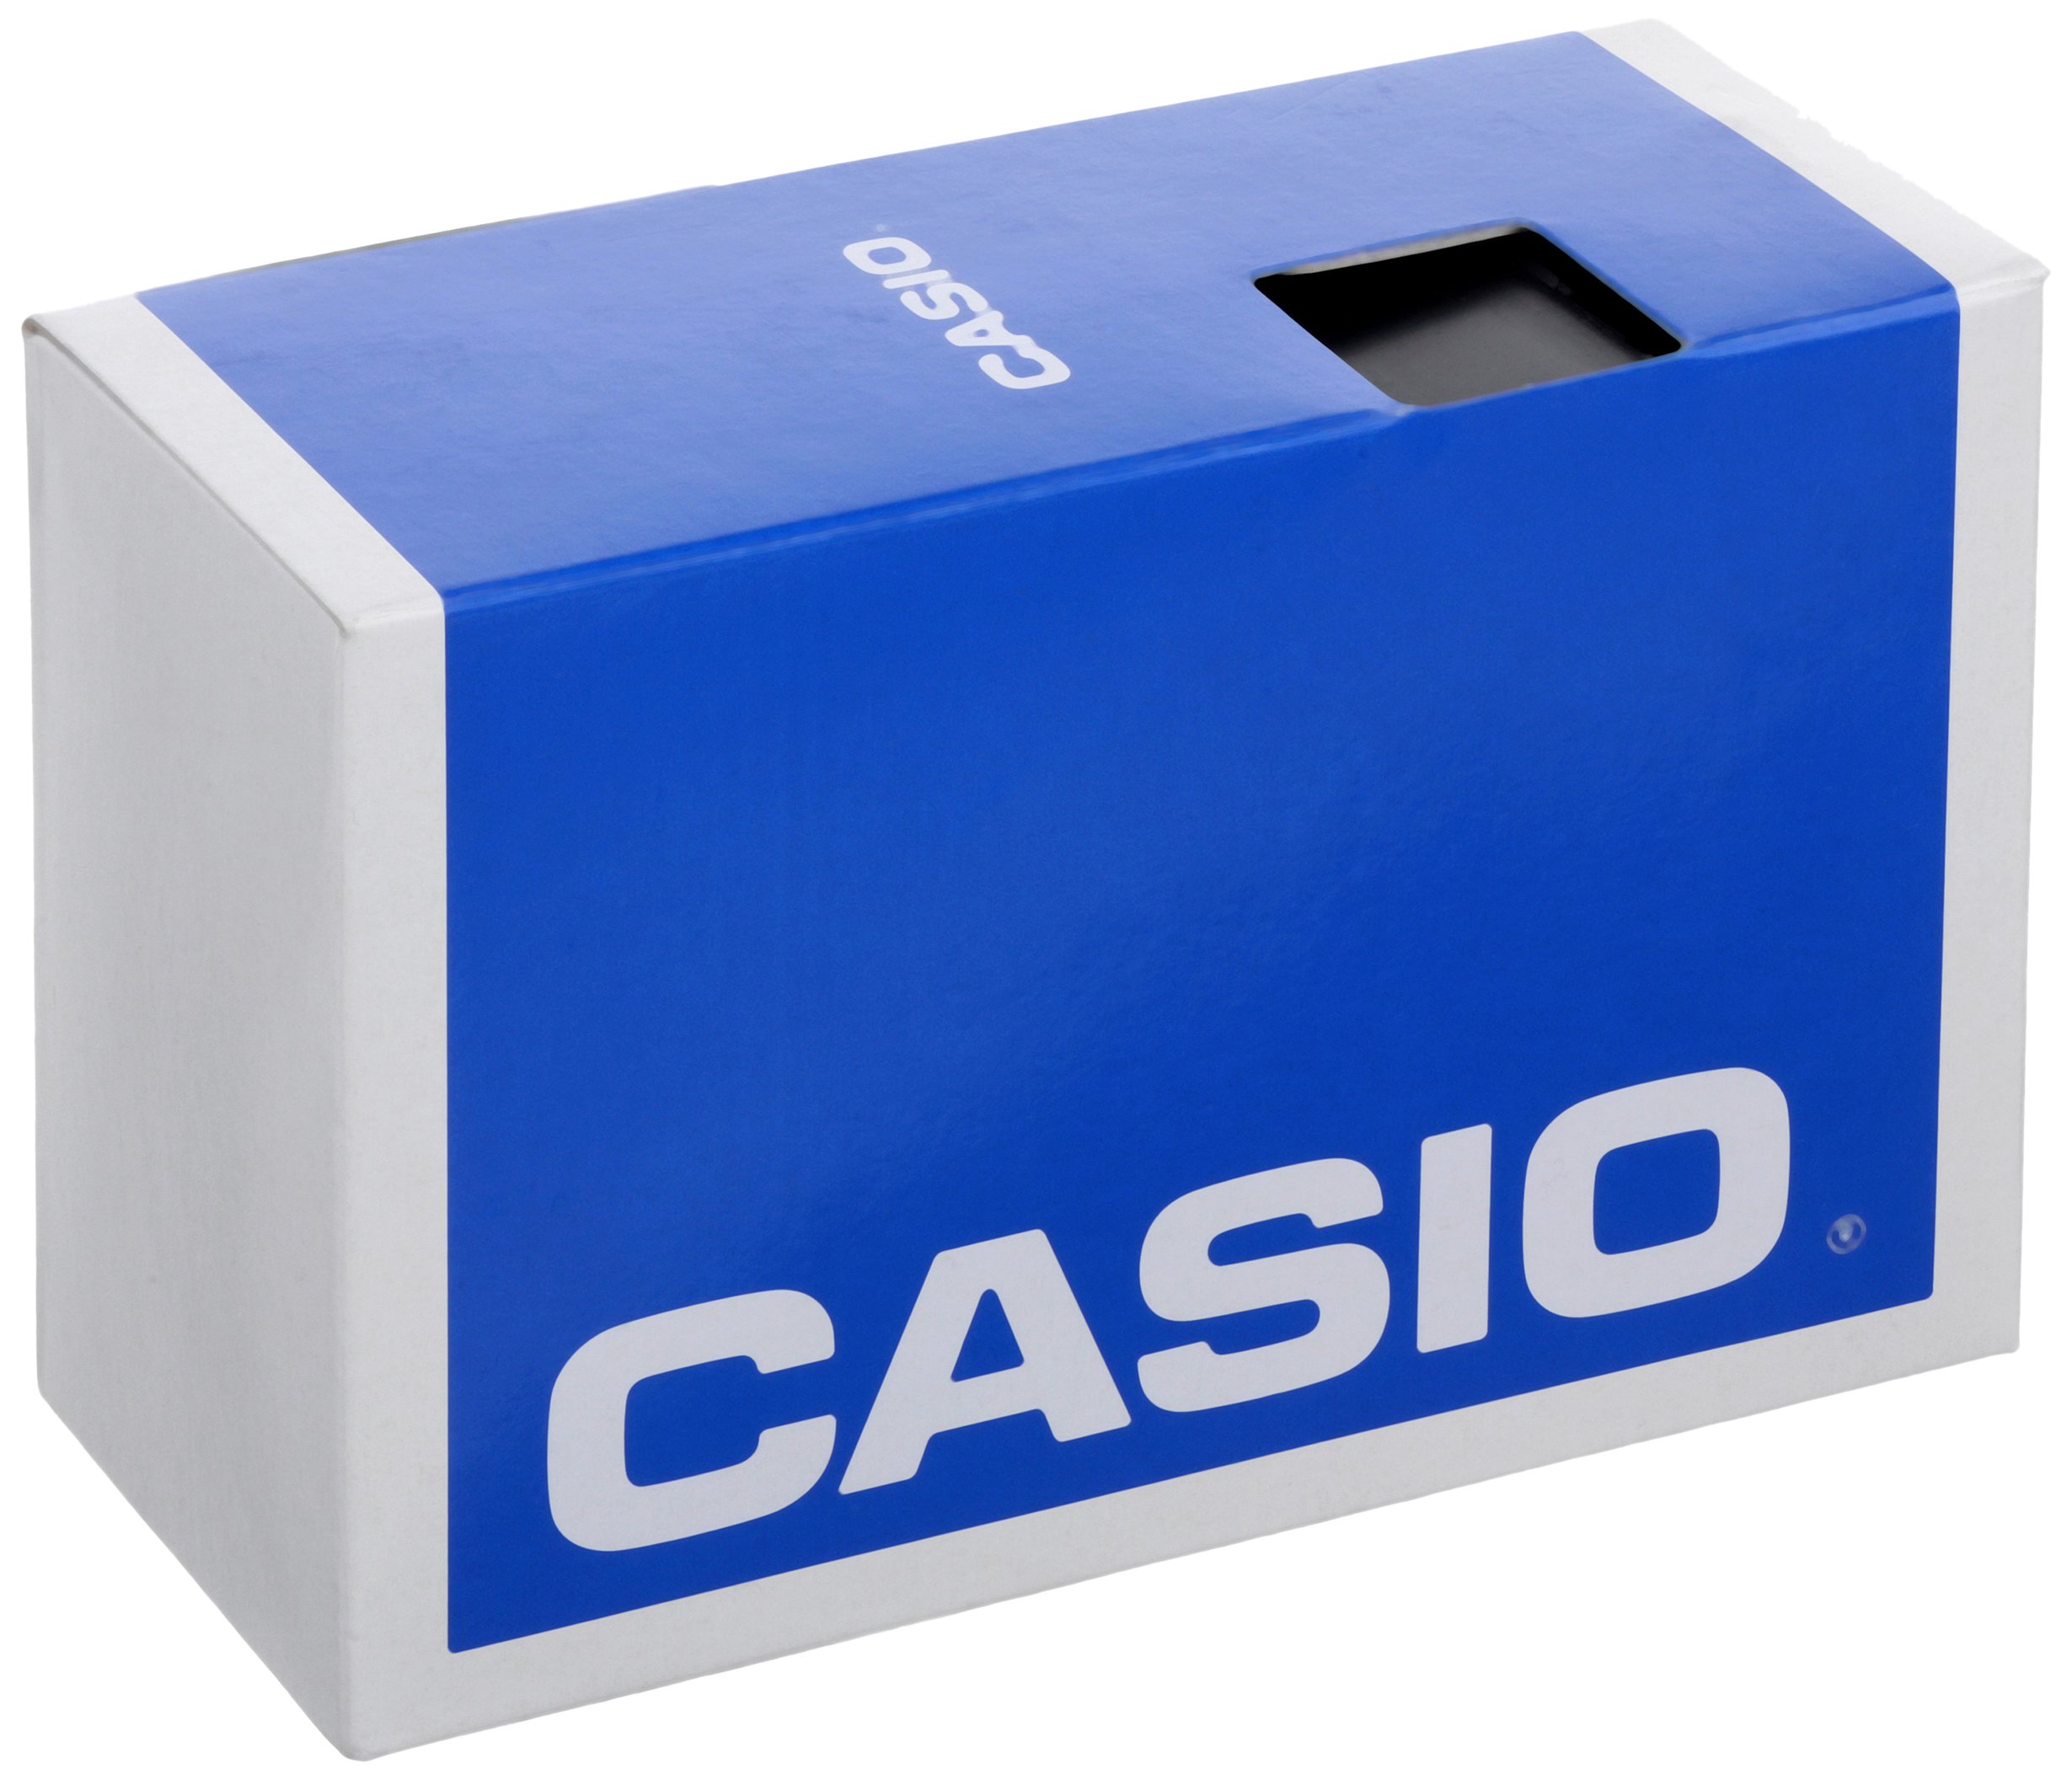 Casio Men's Retrograde MCW200H Sport Watch